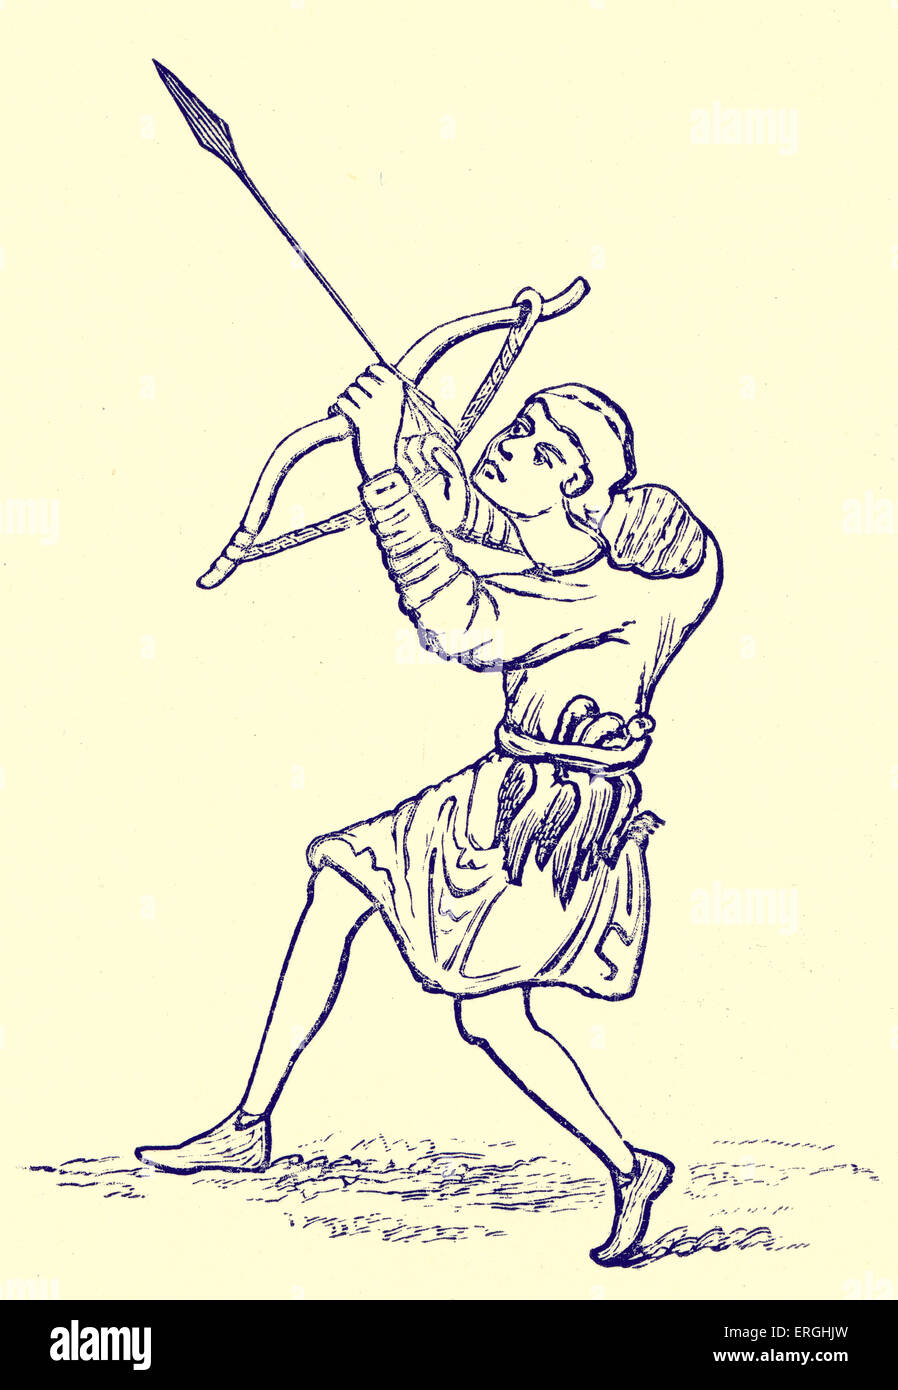 Archer, 11. Jahrhundert. 19. Jahrhundert Reproduktion Abbildung. Stockfoto